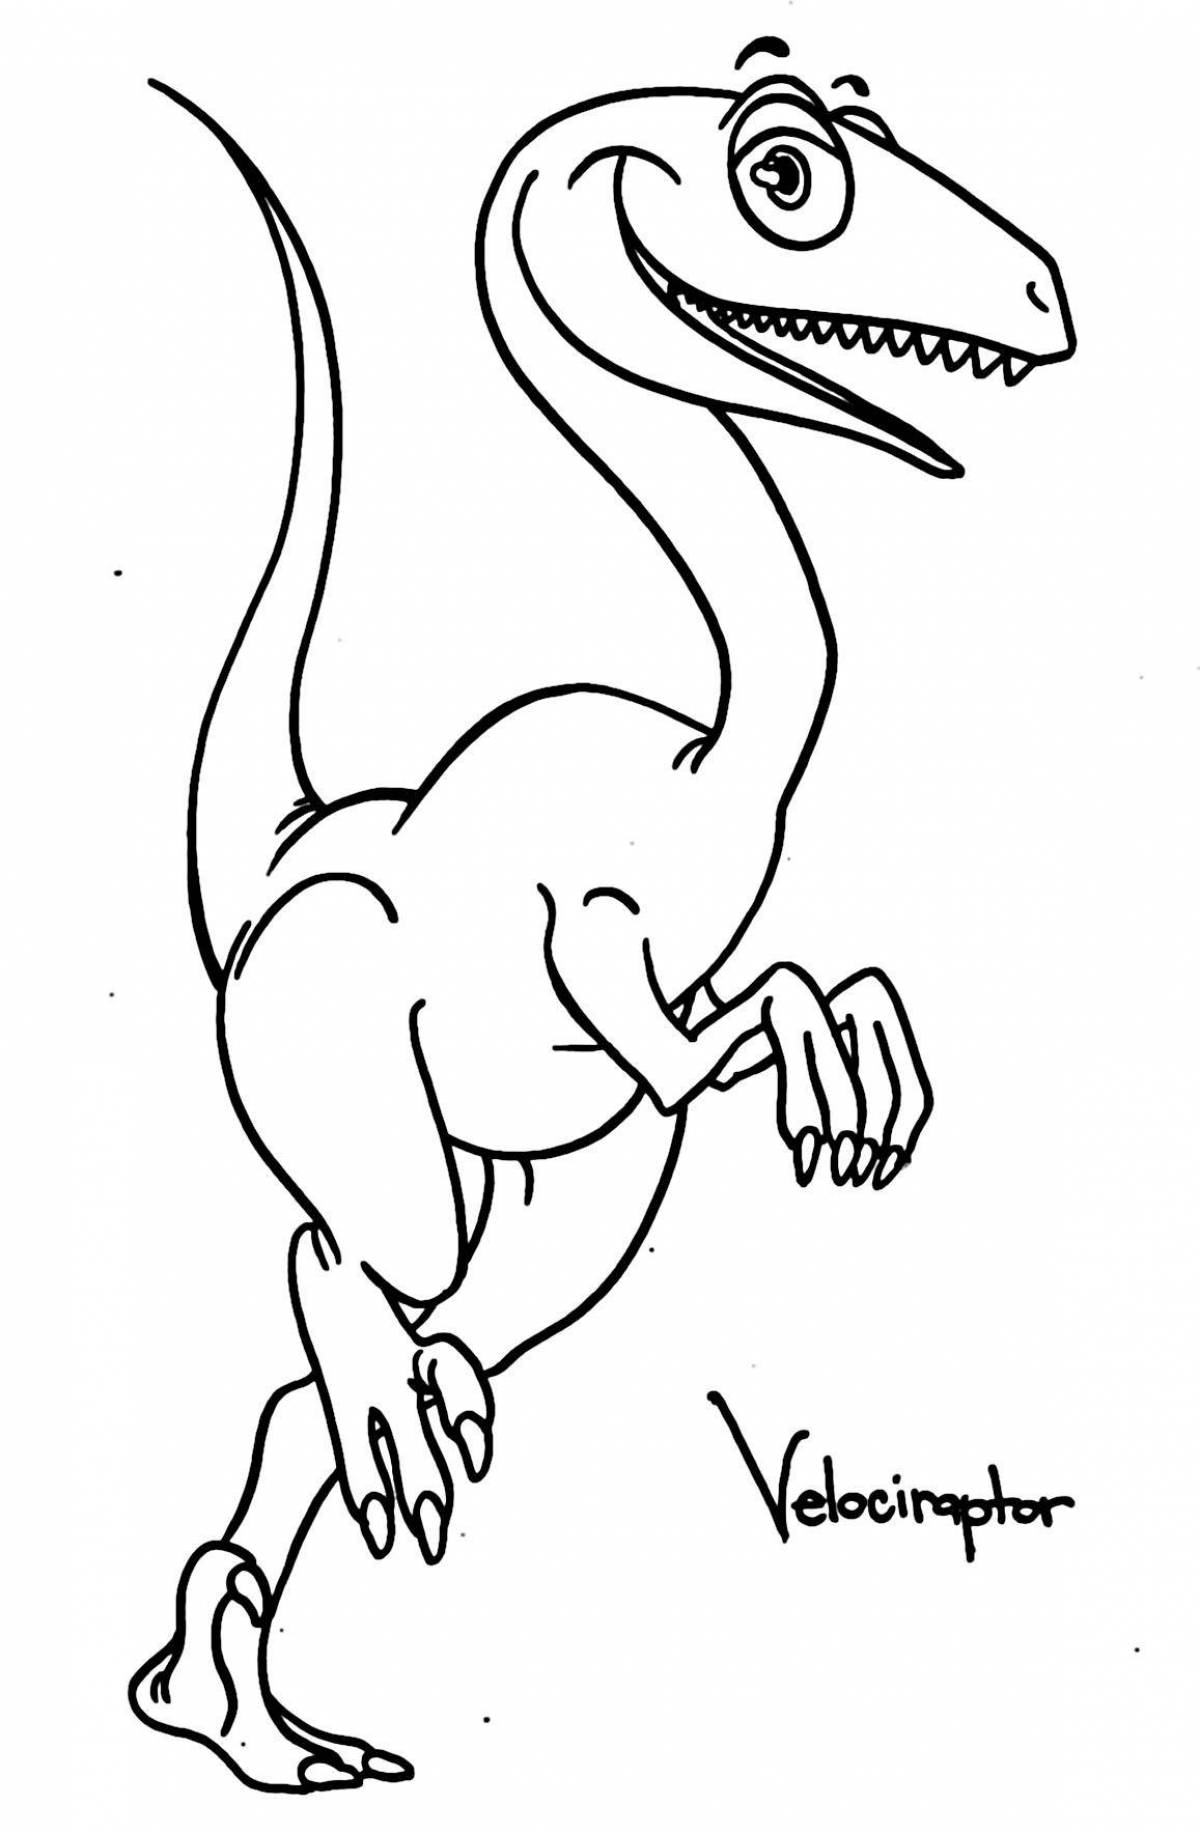 Coloring page elegant velociraptor